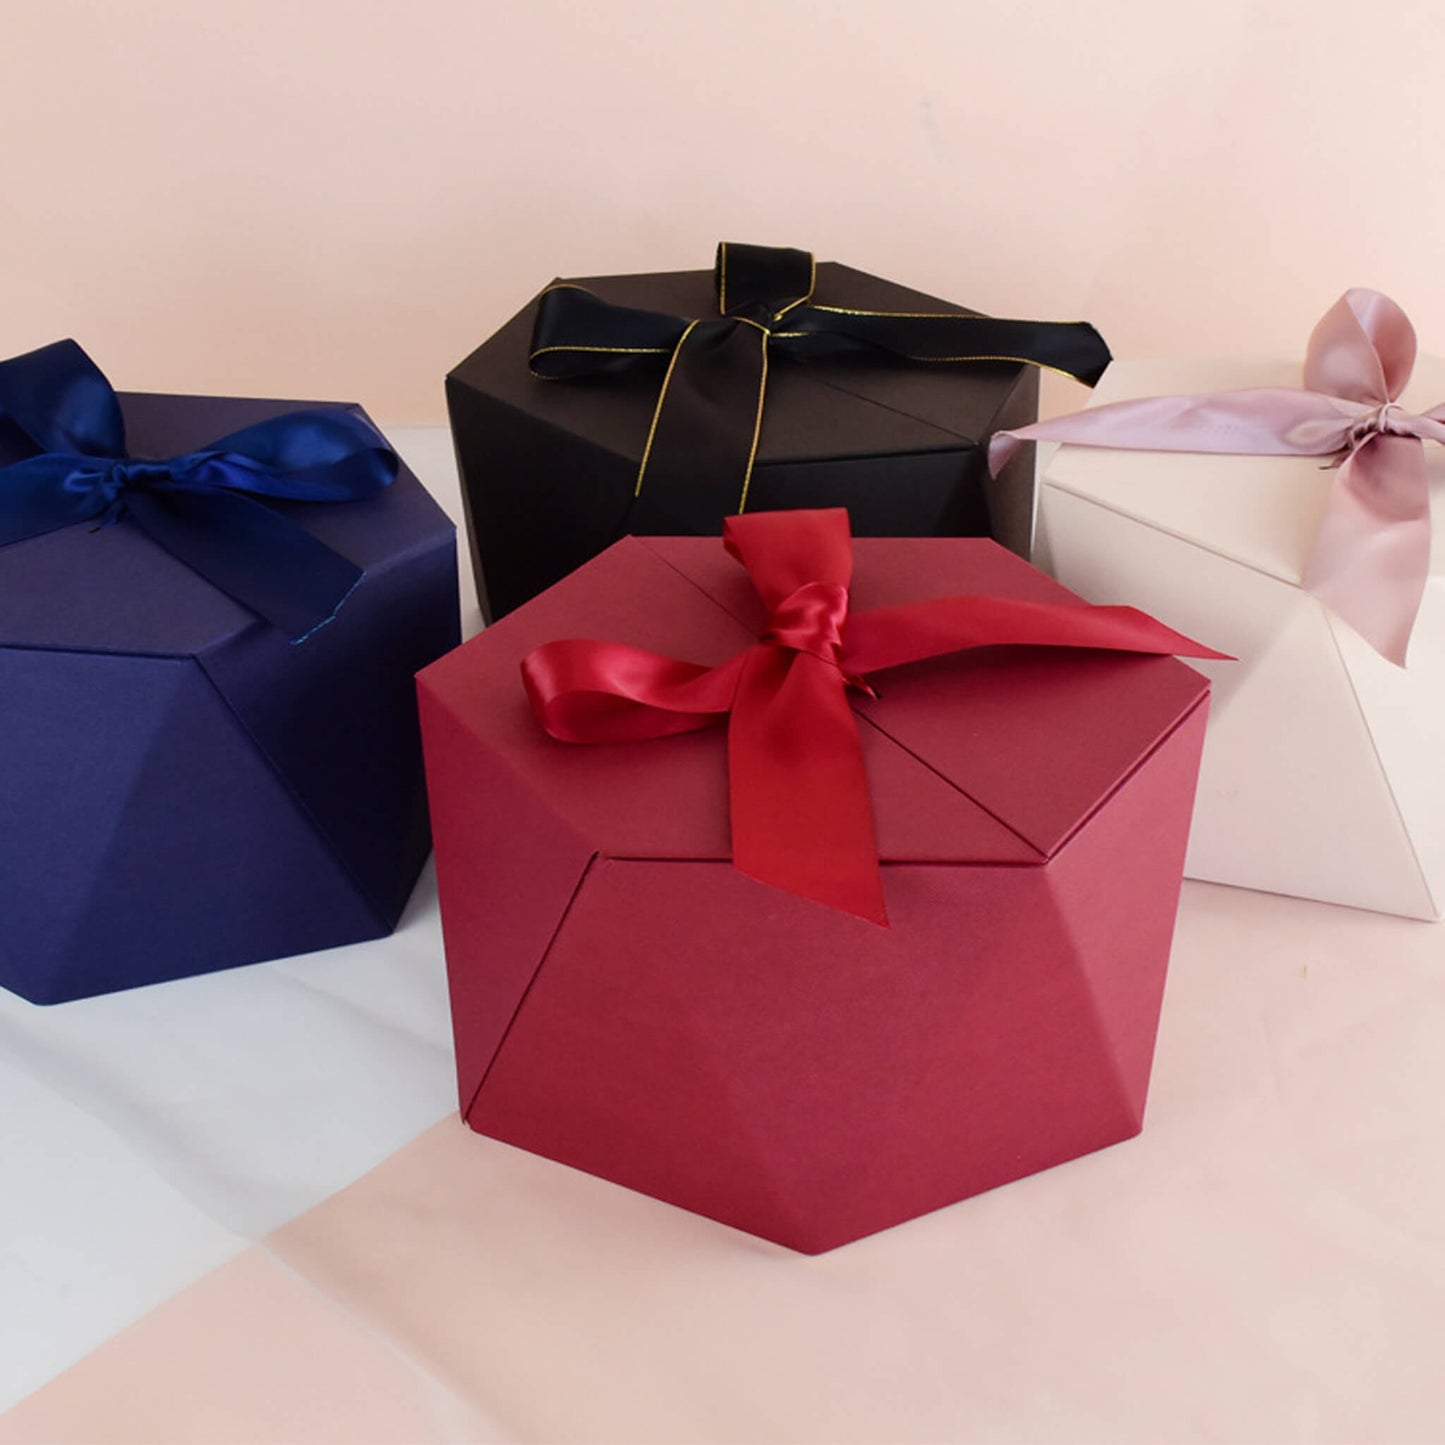 Hexagon Design Gift Box with Ribbon